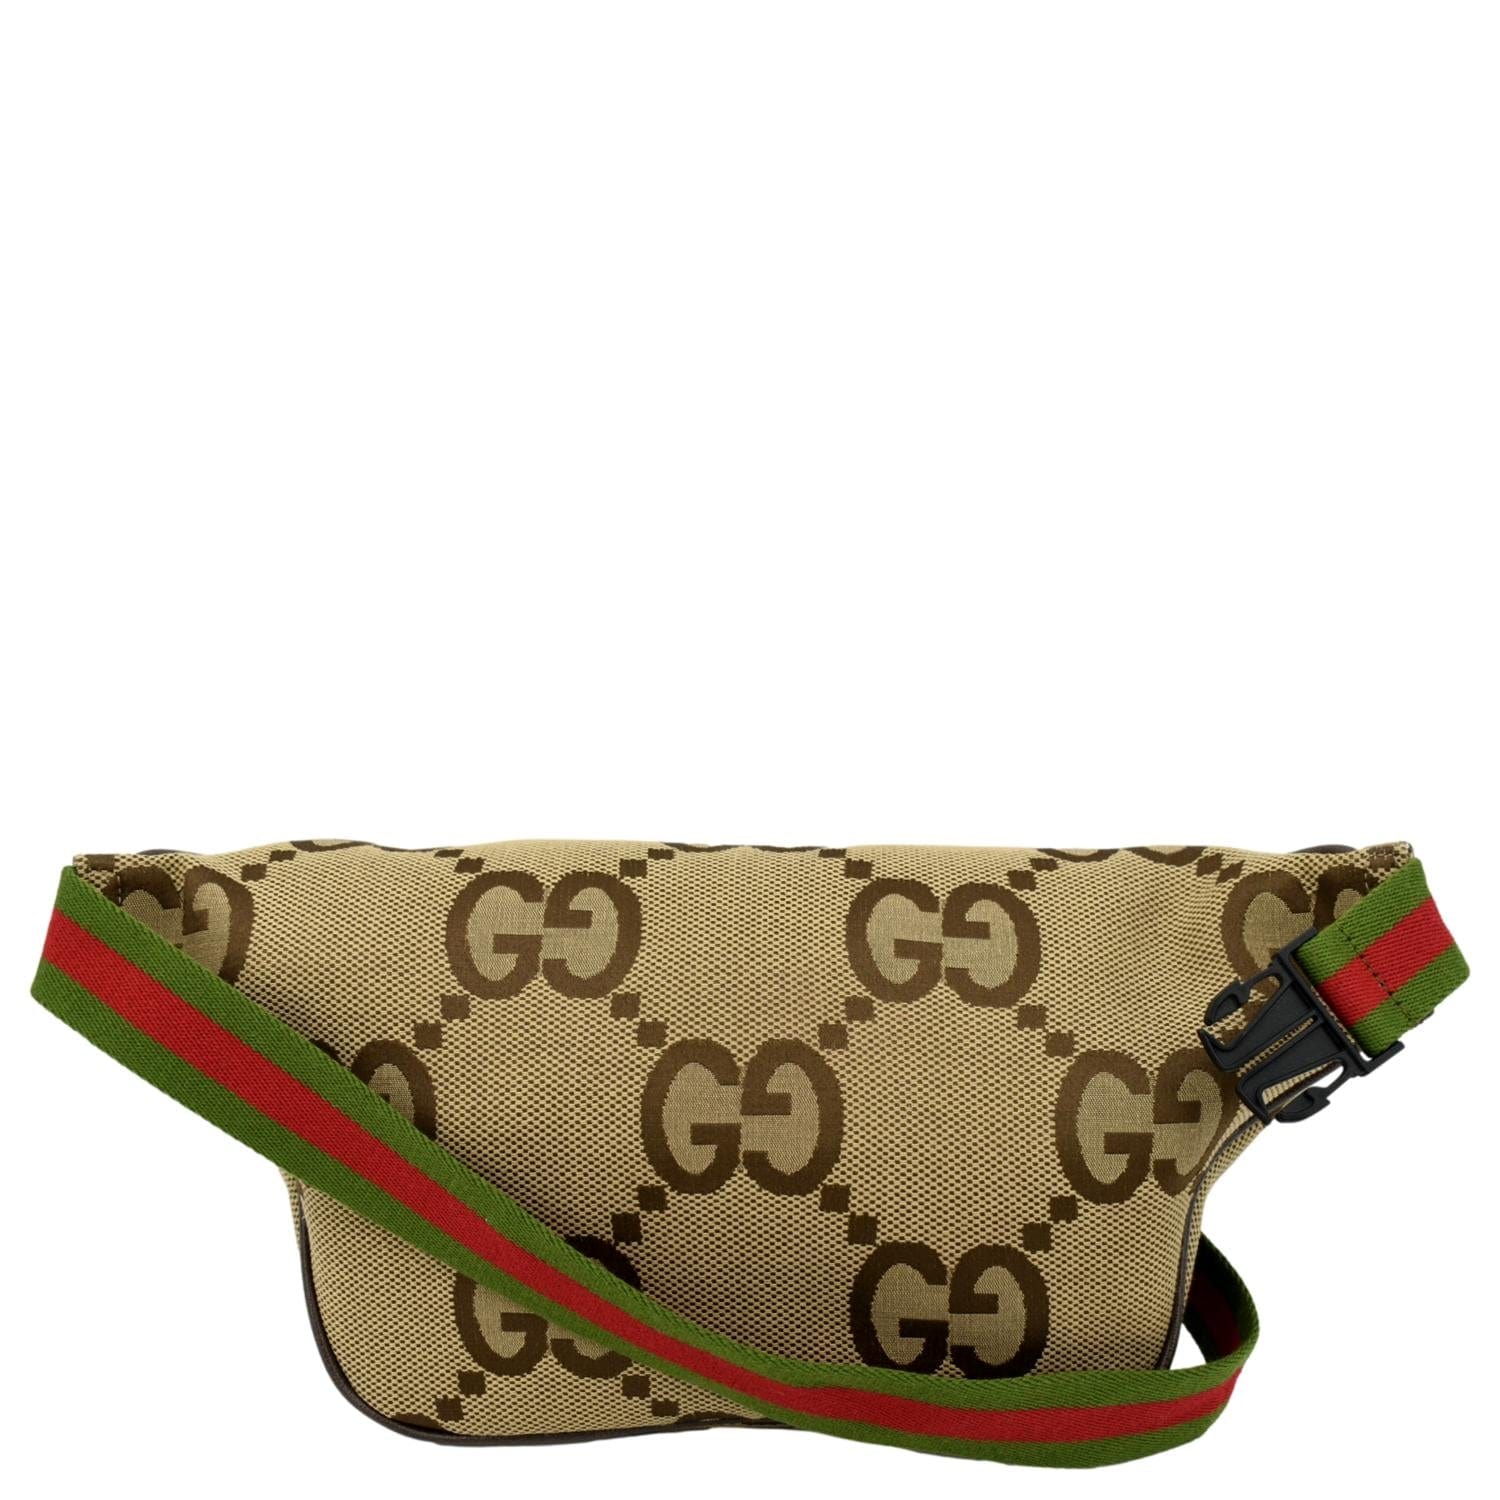 Gucci Men's Jumbo GG Tote Bag